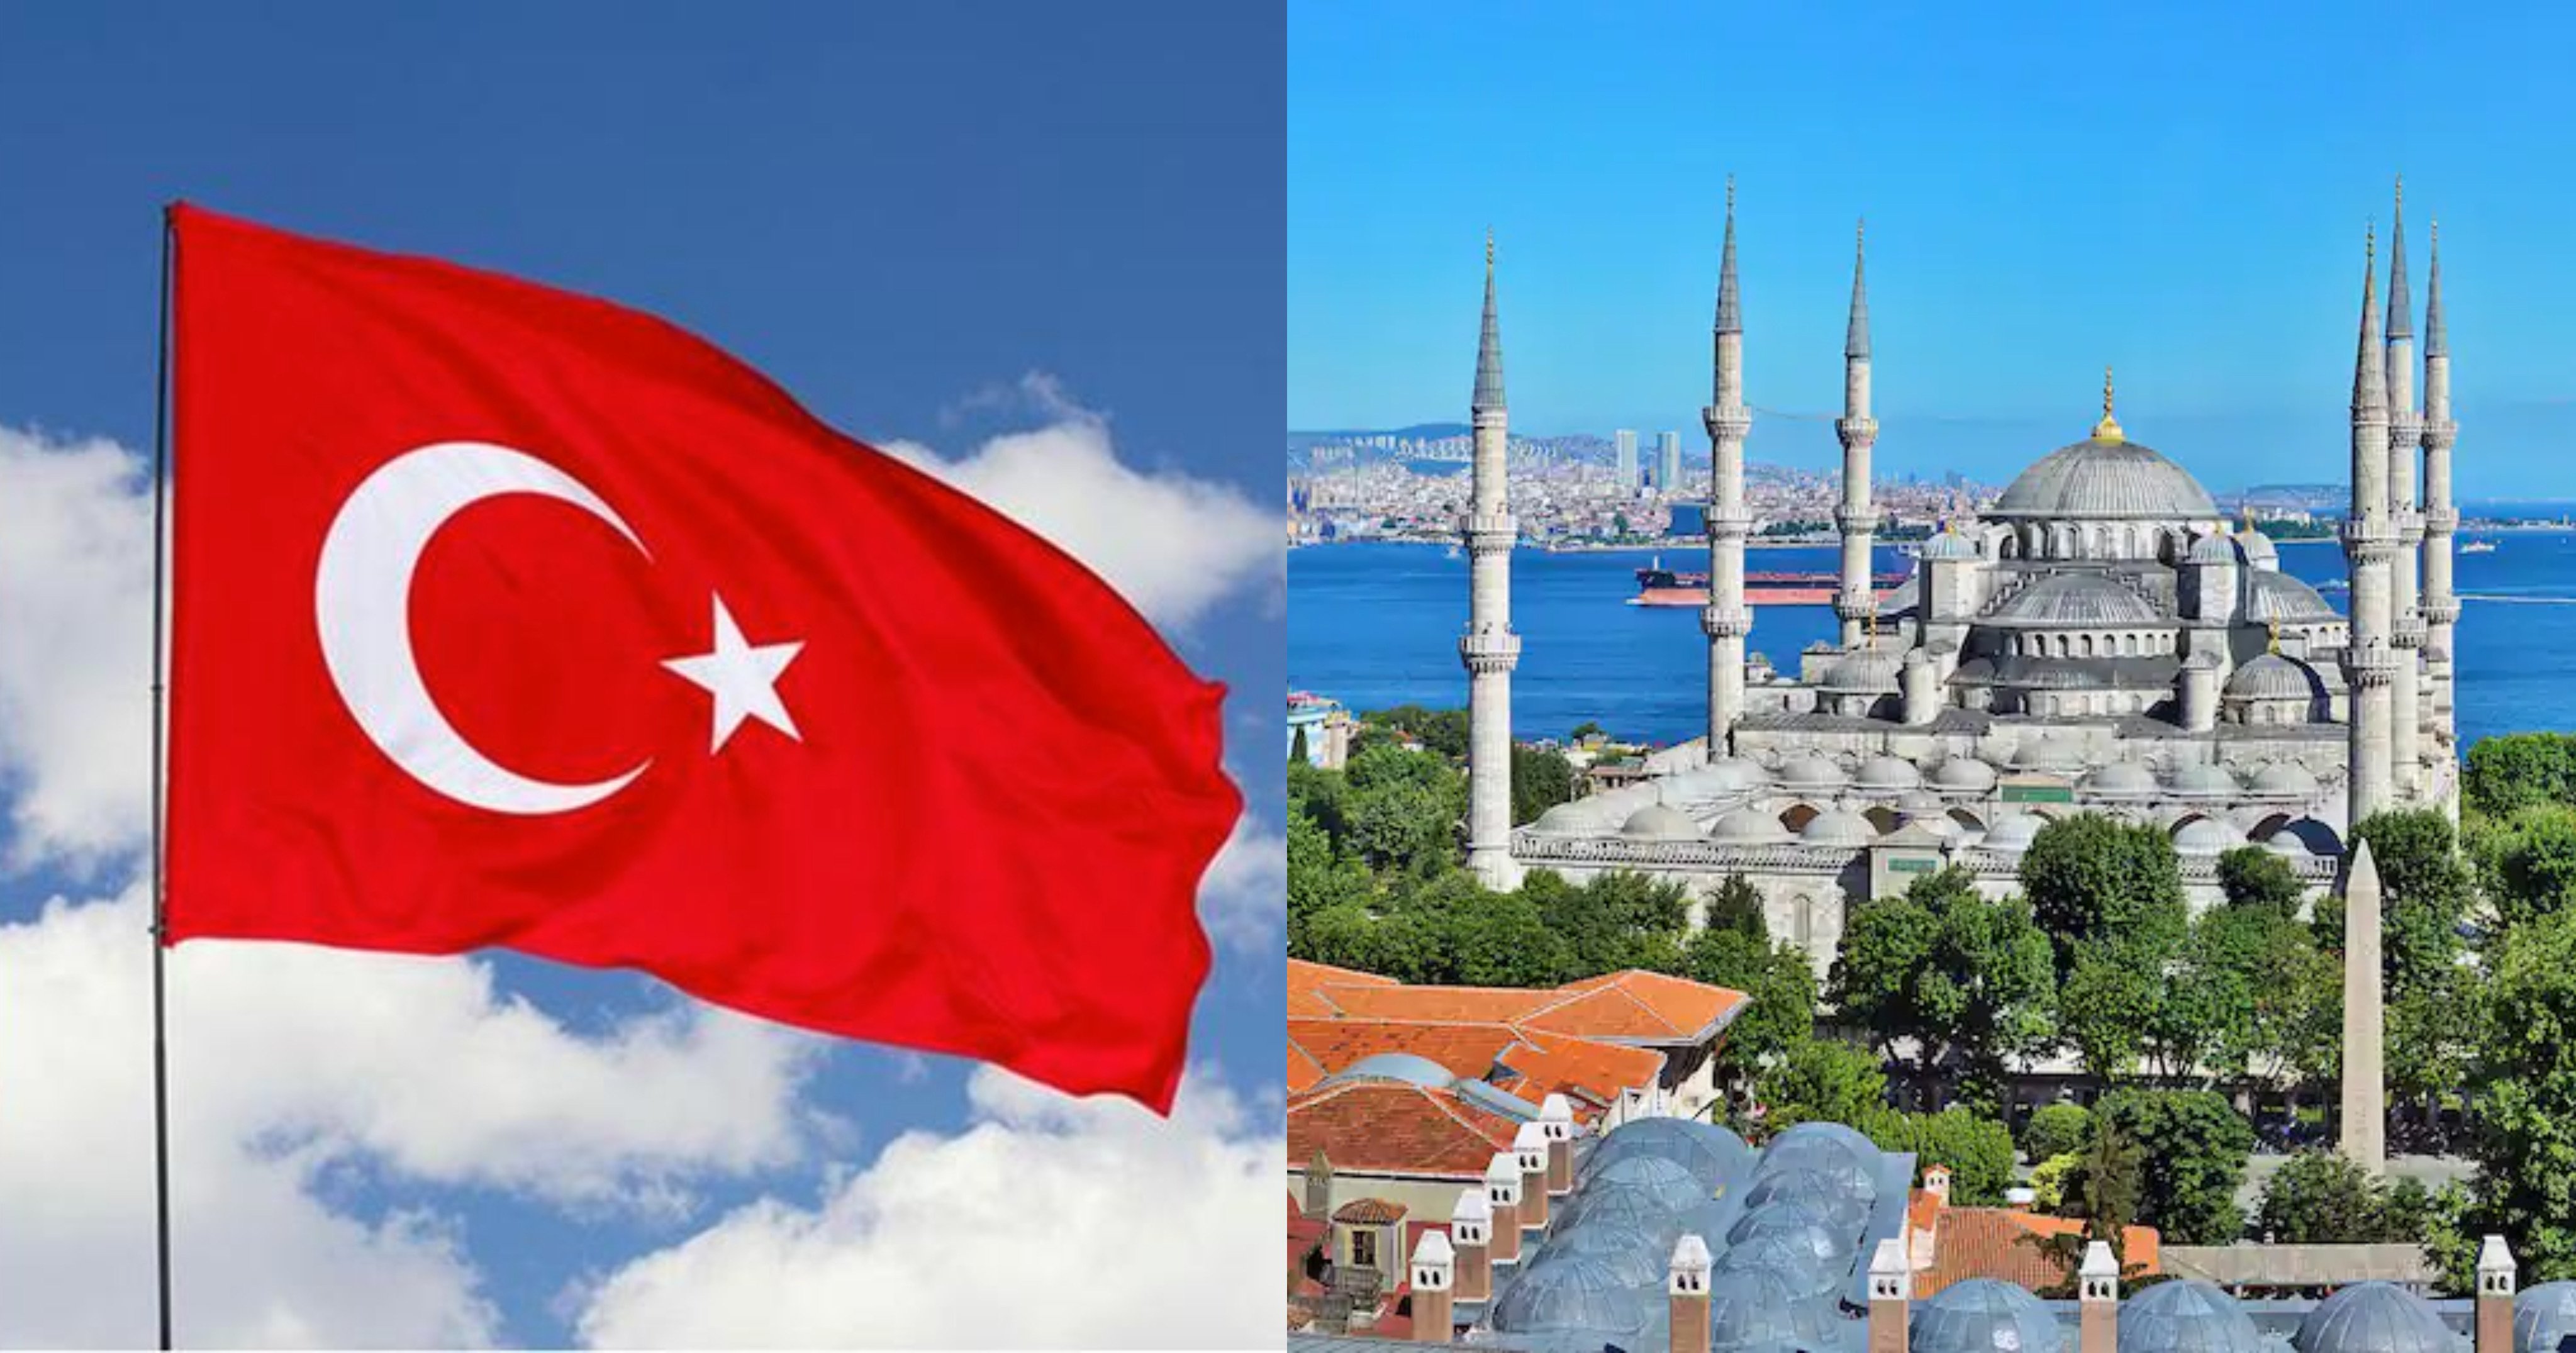 1108f6cd 2050 4357 9be7 17f31a6462fe.jpeg?resize=1200,630 - "여러분 앞으로 터키는  '이렇게' 불러야합니다" 터키 공식 국가명 바뀌었다